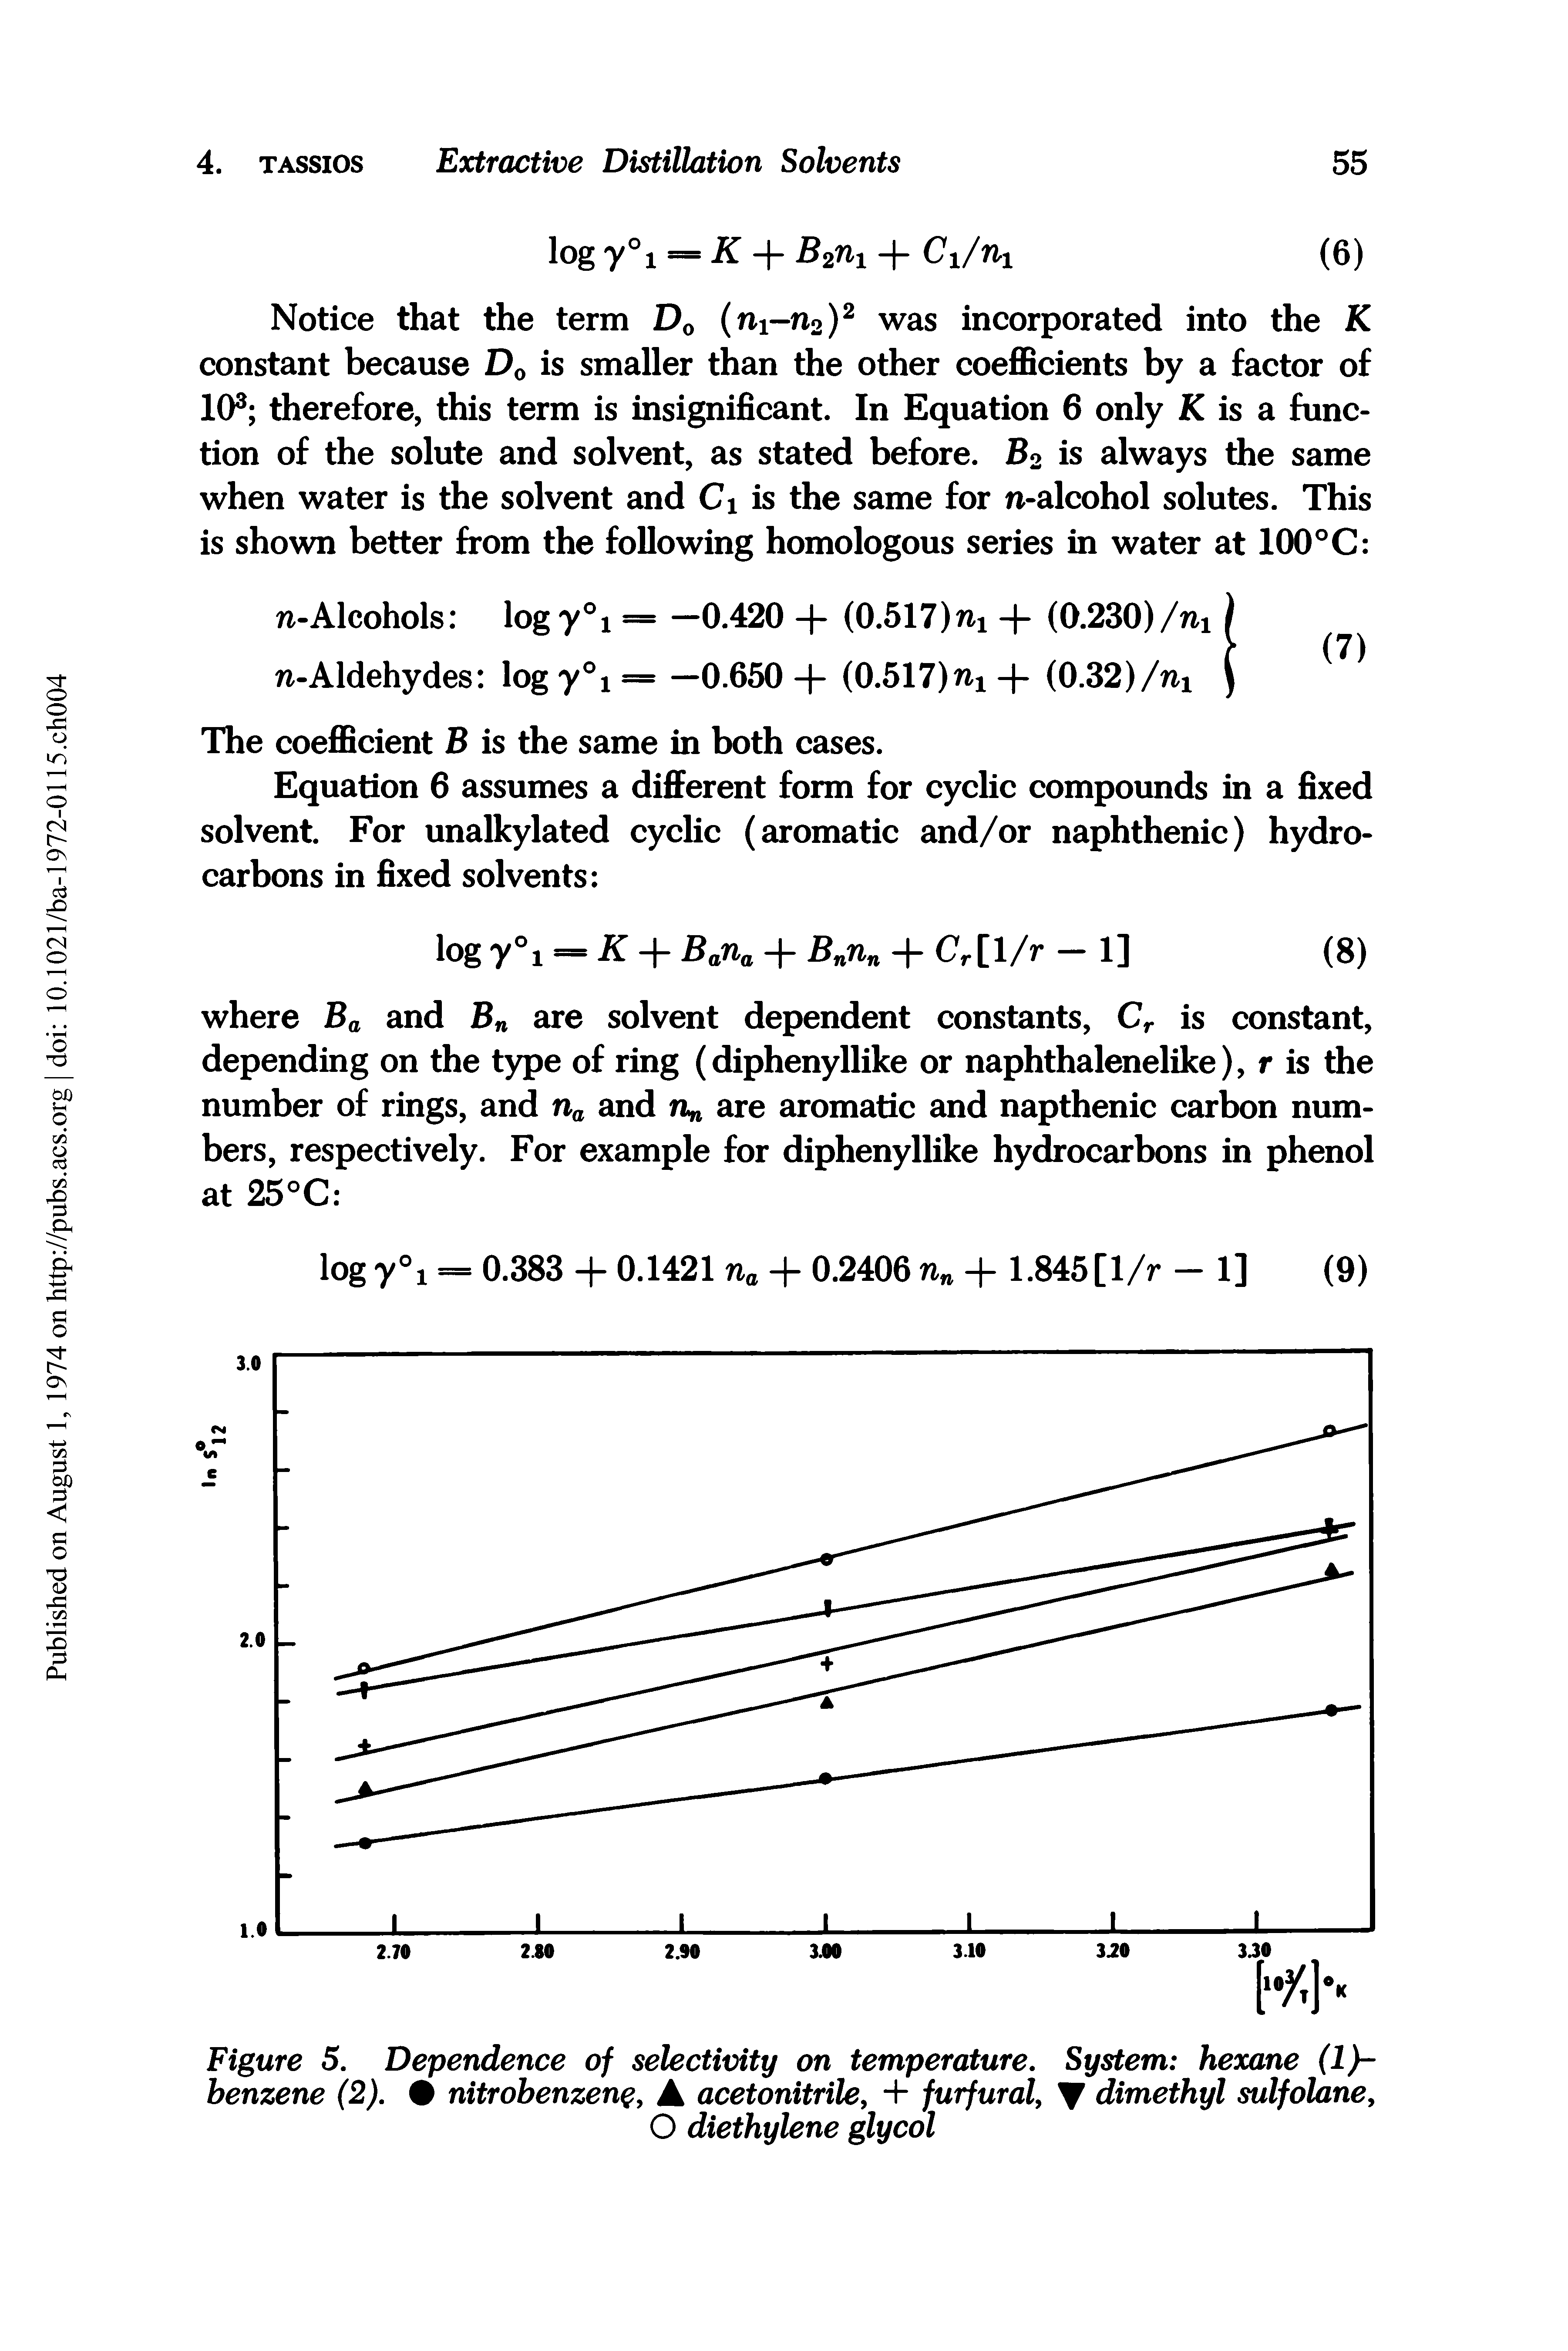 Figure 5. Dependence of selectivity on temperature. System hexane (1)-benzene (2). nitrobenzene, A acetonitrile, + furfural, V dimethyl sulfolane,...